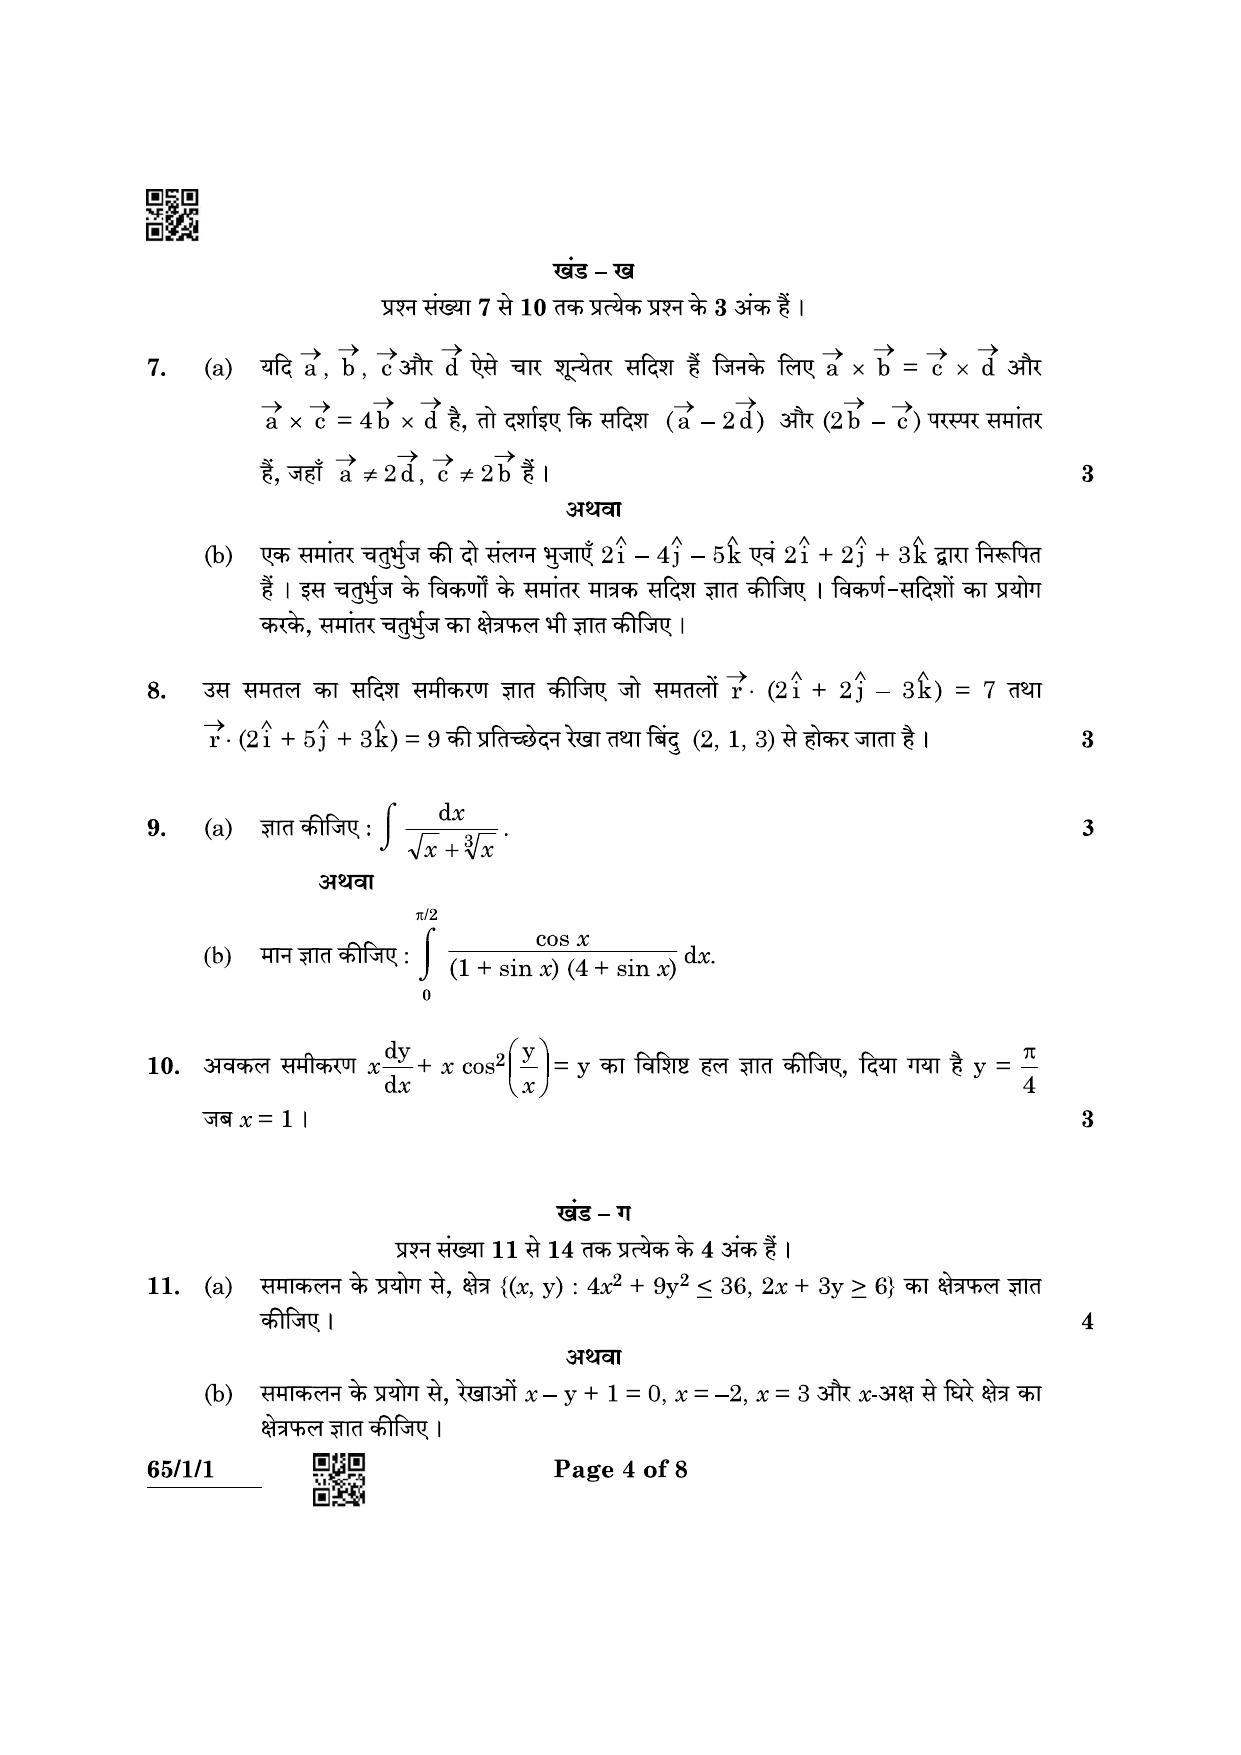 CBSE Class 12 65-1-1 Mathematcs 2022 Question Paper - Page 4